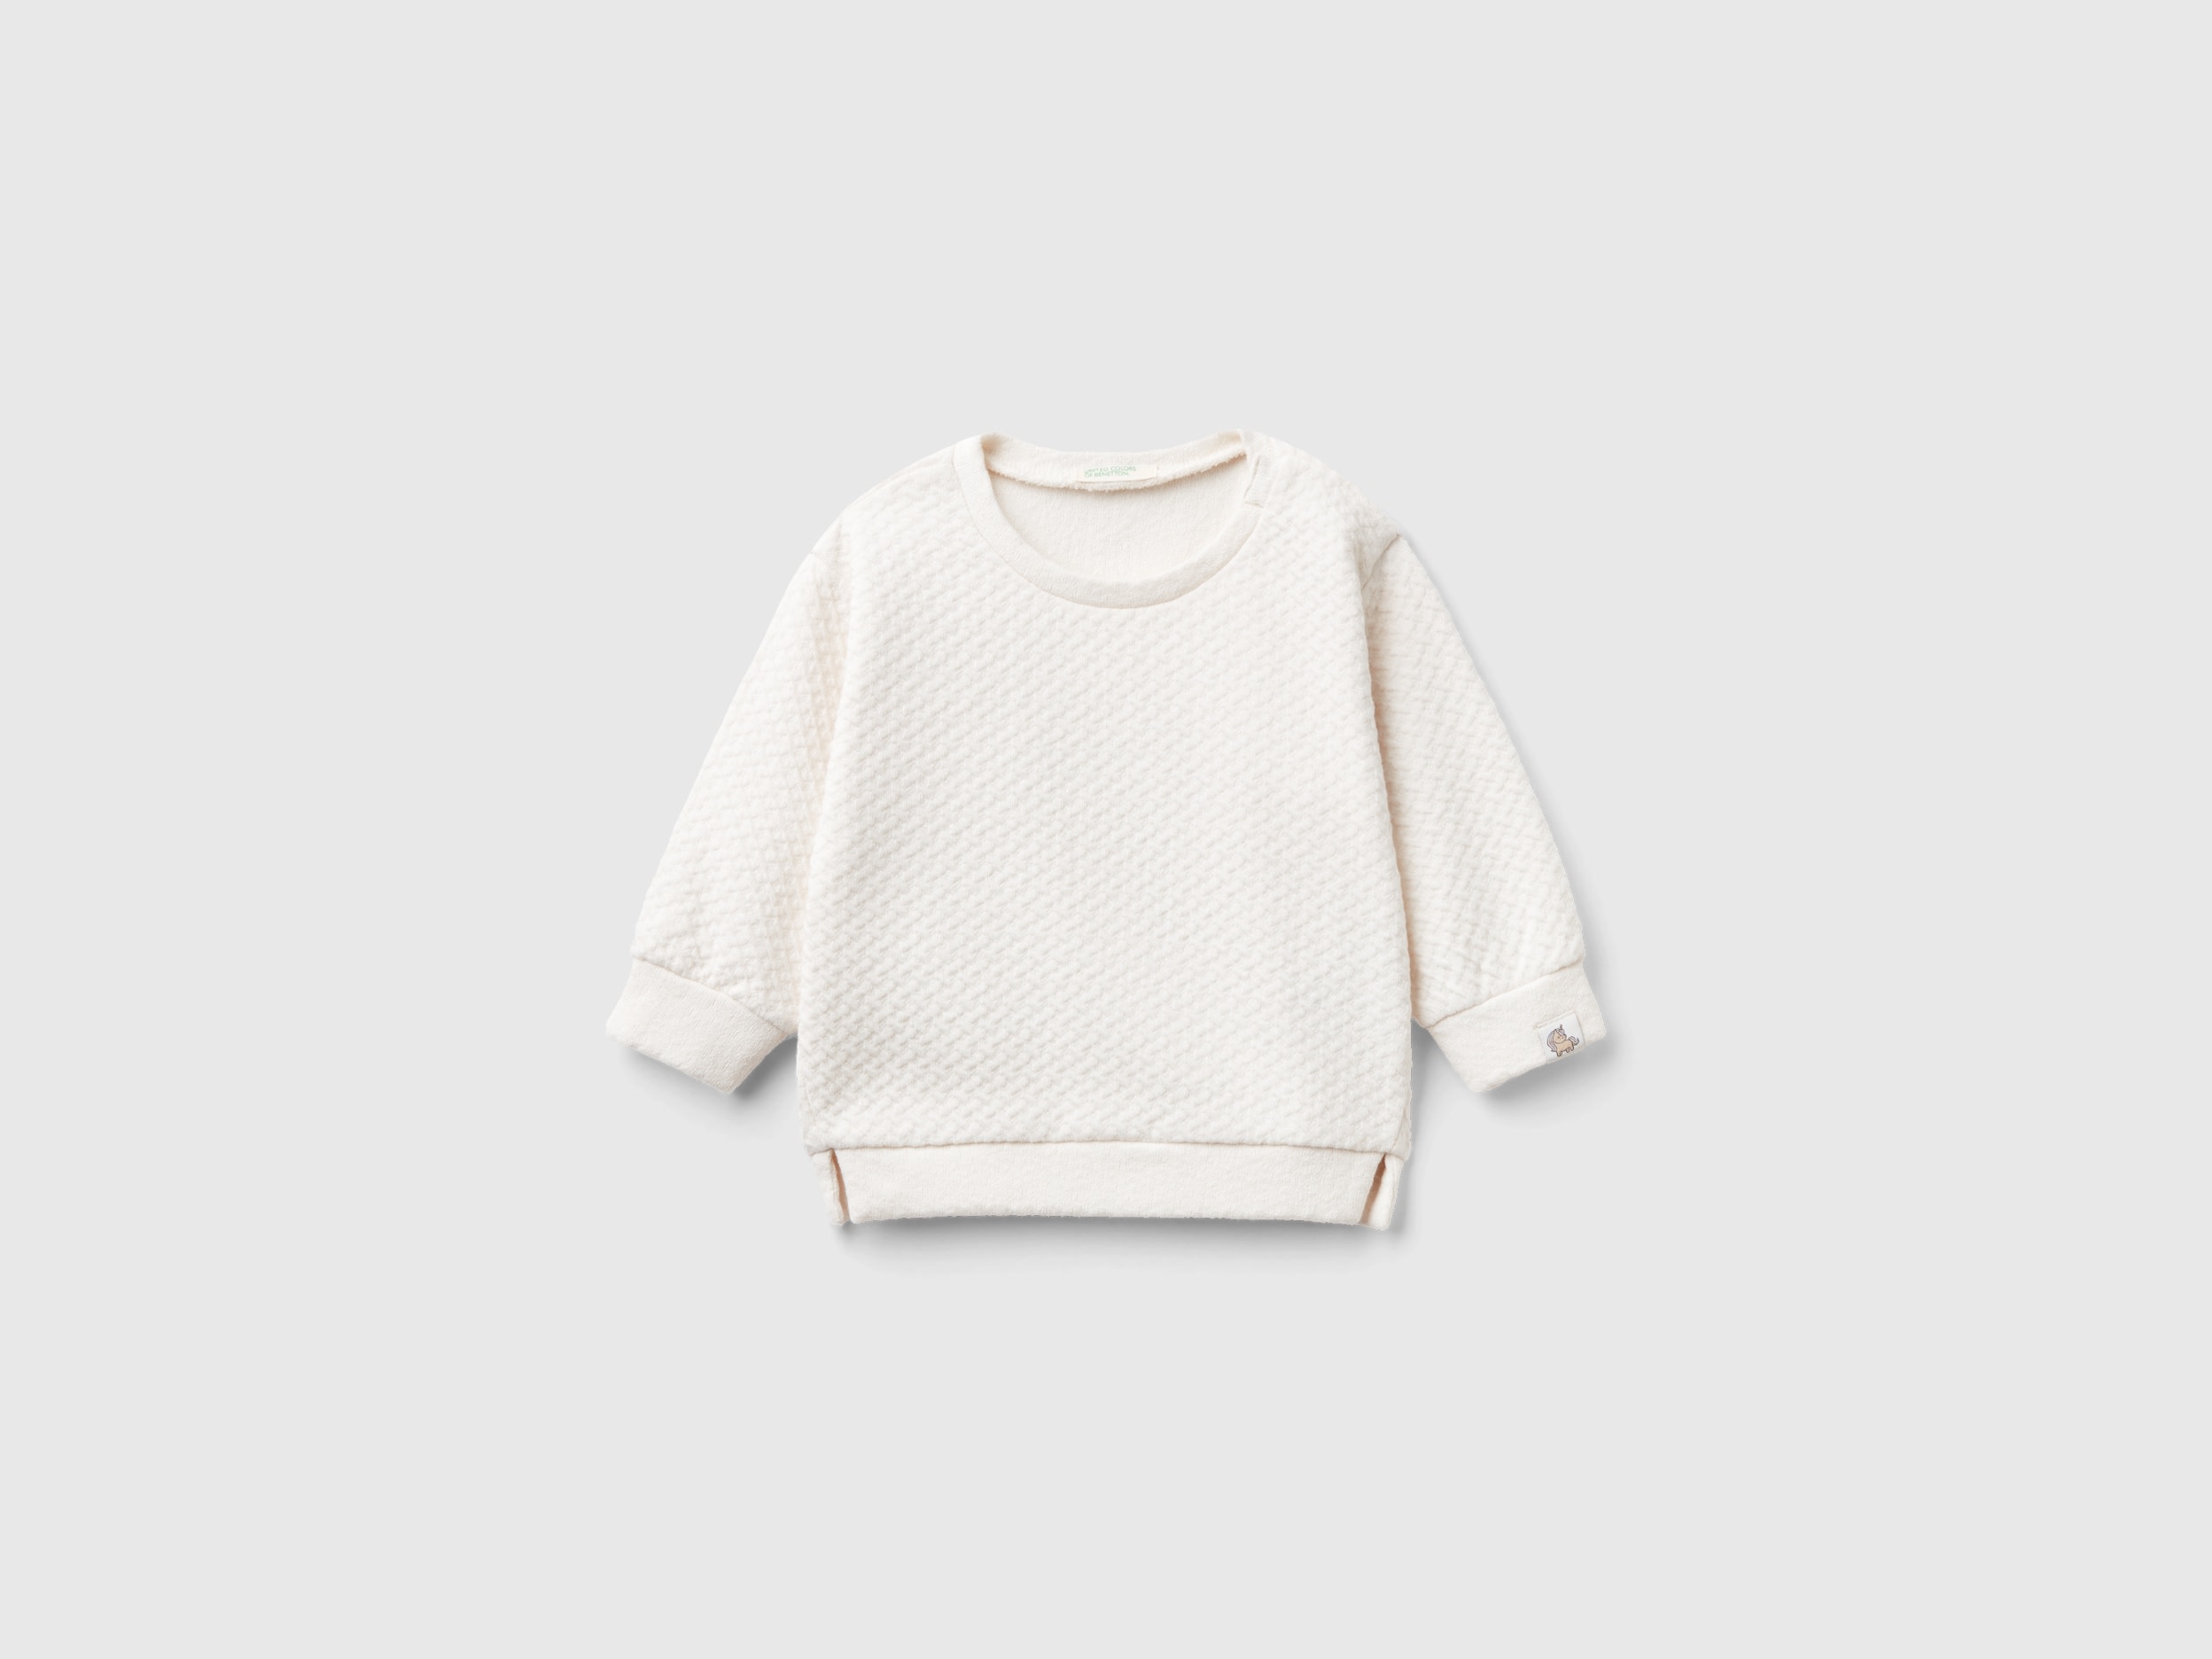 Image of Benetton, Pullover Jacquard Sweatshirt, size 82, Creamy White, Kids